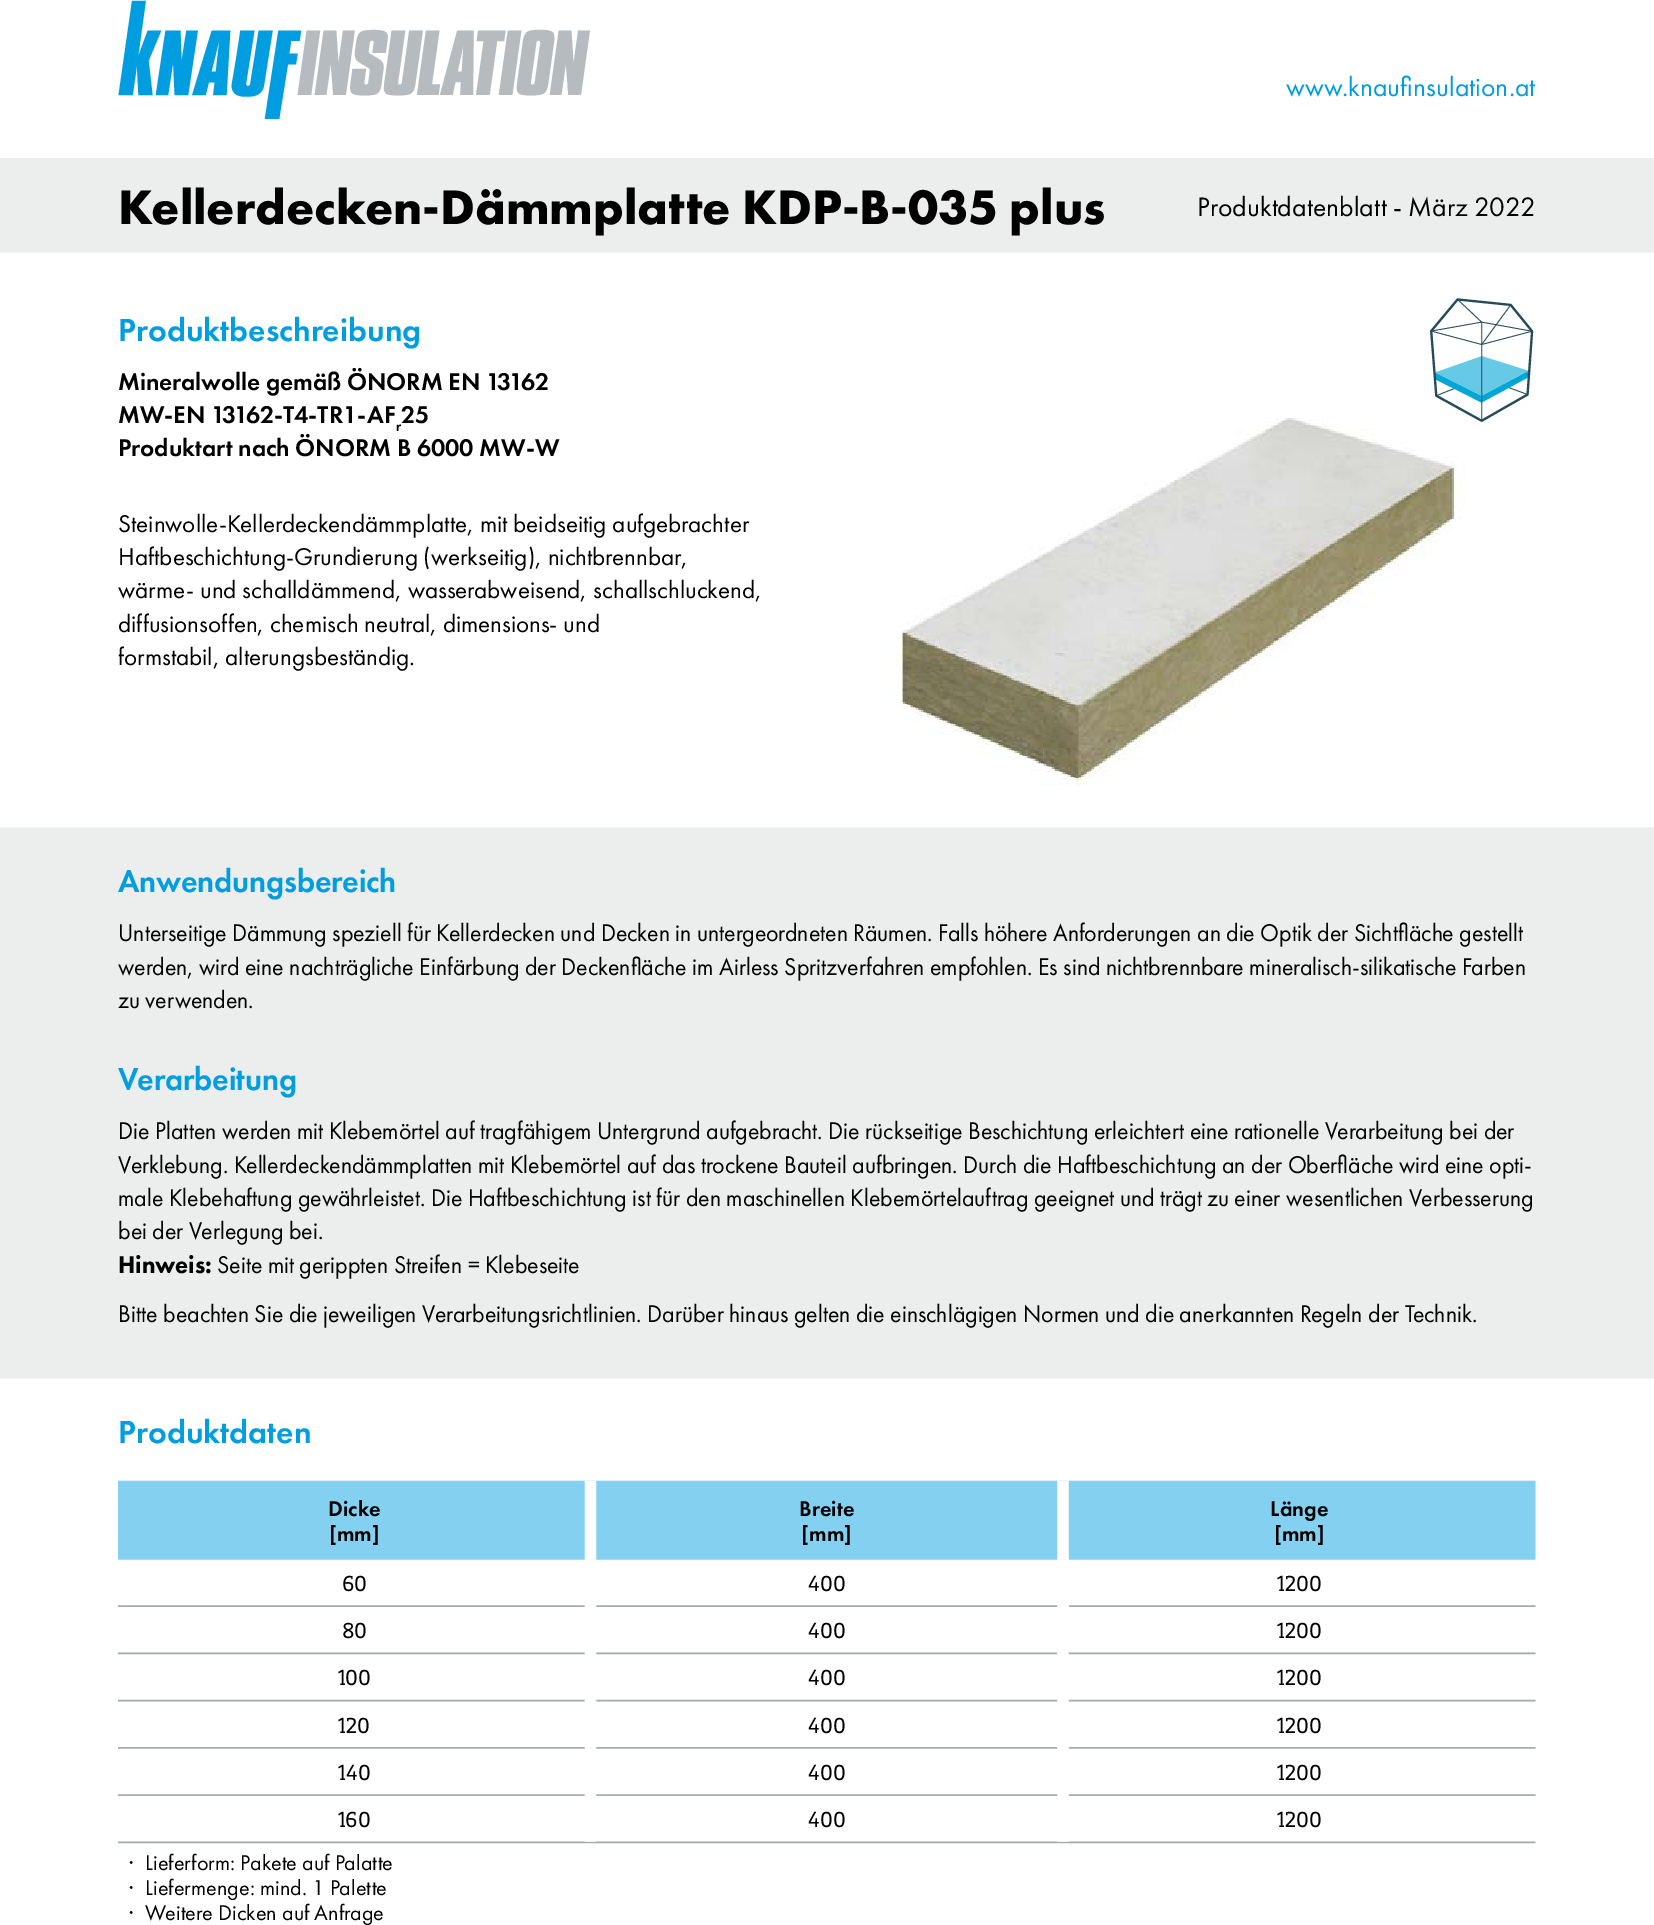 Kellerdeckendämmplatte KDP-B-035 plus, Produktdatenblatt